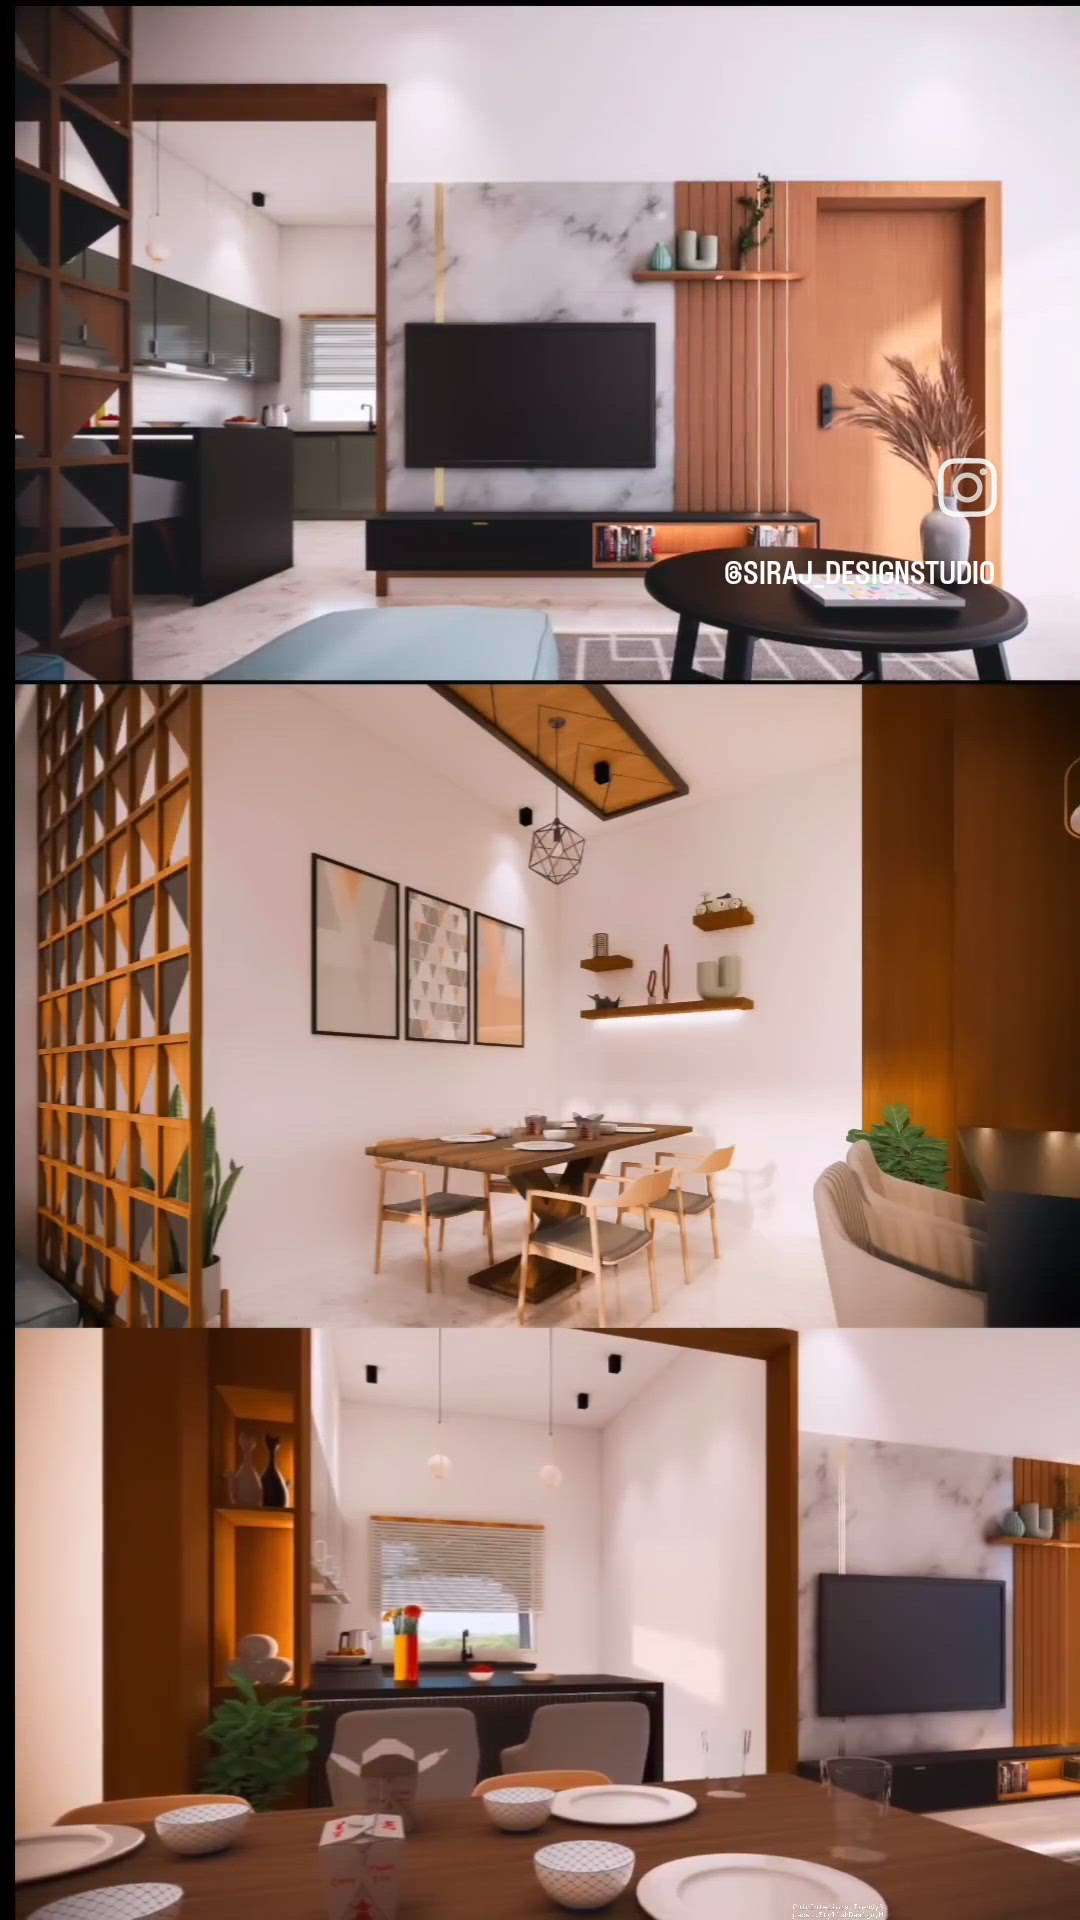 Interior Desibn Ideas.🌿
•Tvunit
•Dining
•Kitchen
•Living 
•Breakfast counter

#3d  #InteriorDesigner   #architecture #interior #lighting  #modularTvunits  #LivingroomDesigns